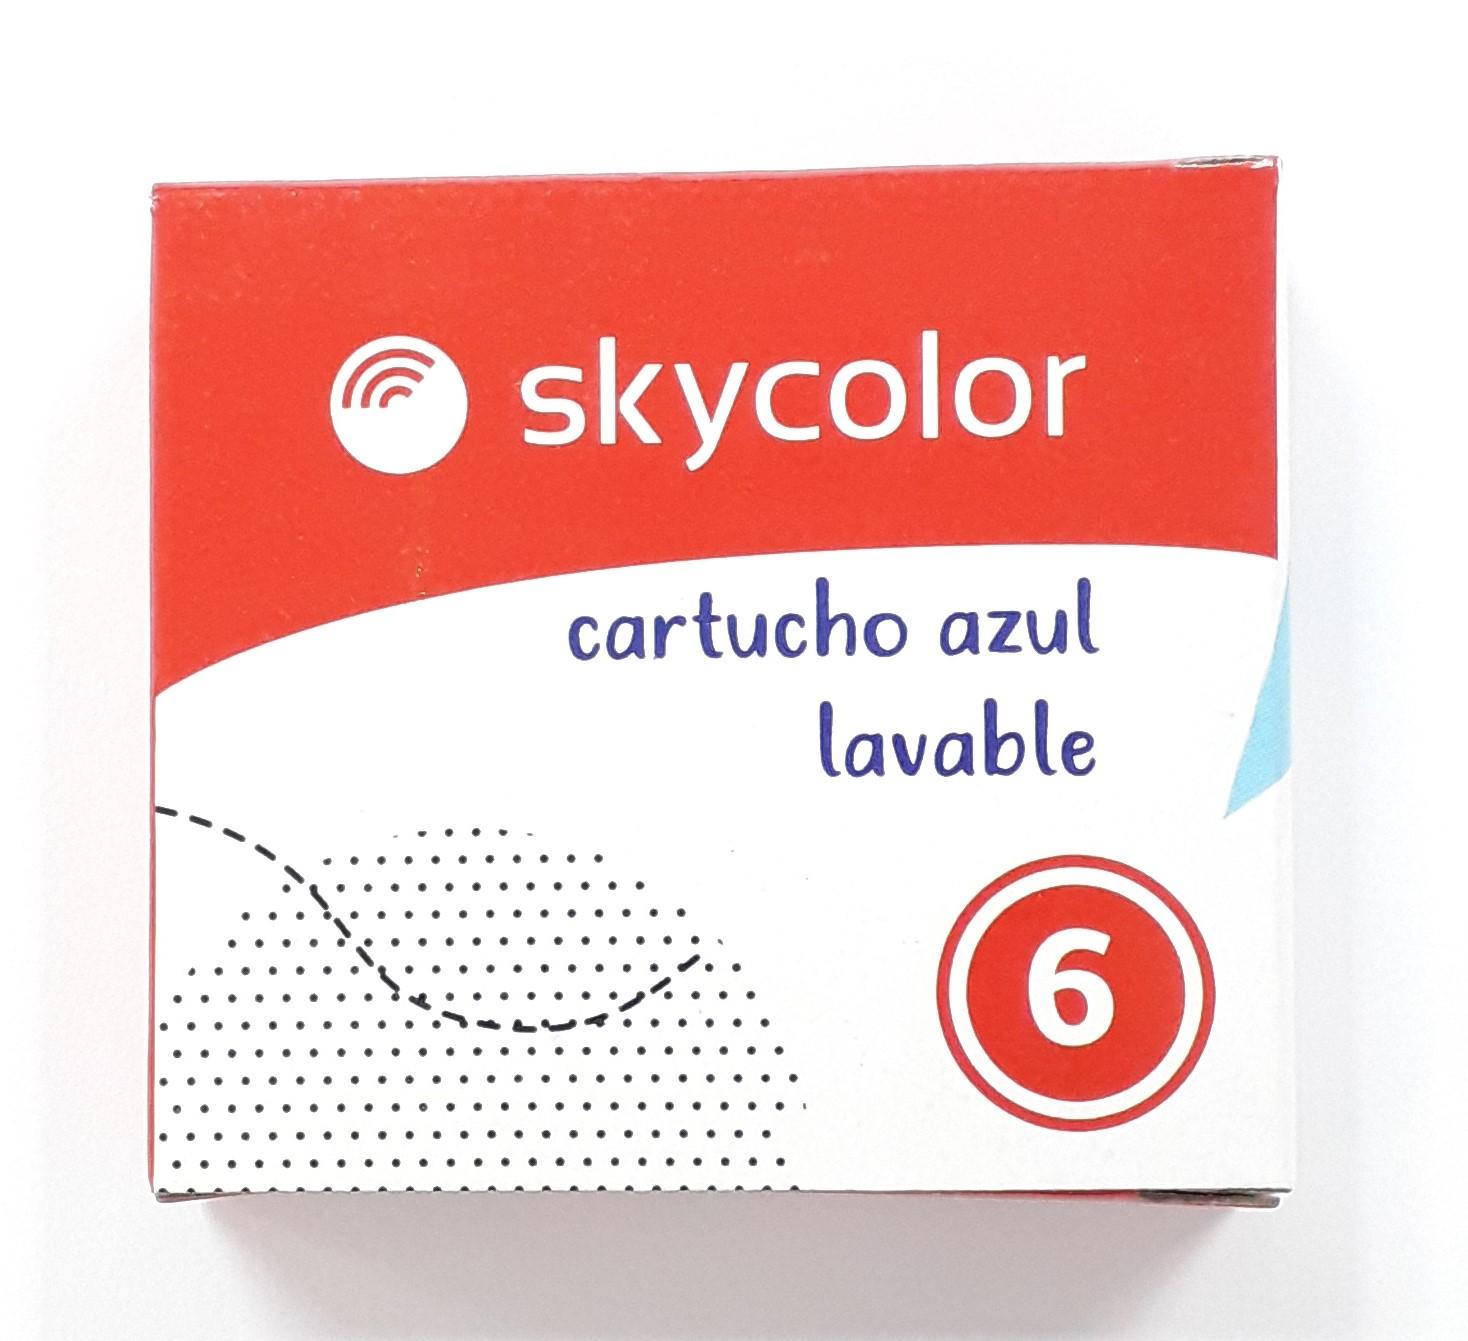 CARTUCHOS SKYCOLOR X 6 UN. AZUL LAVABLE - JJ20311-INK